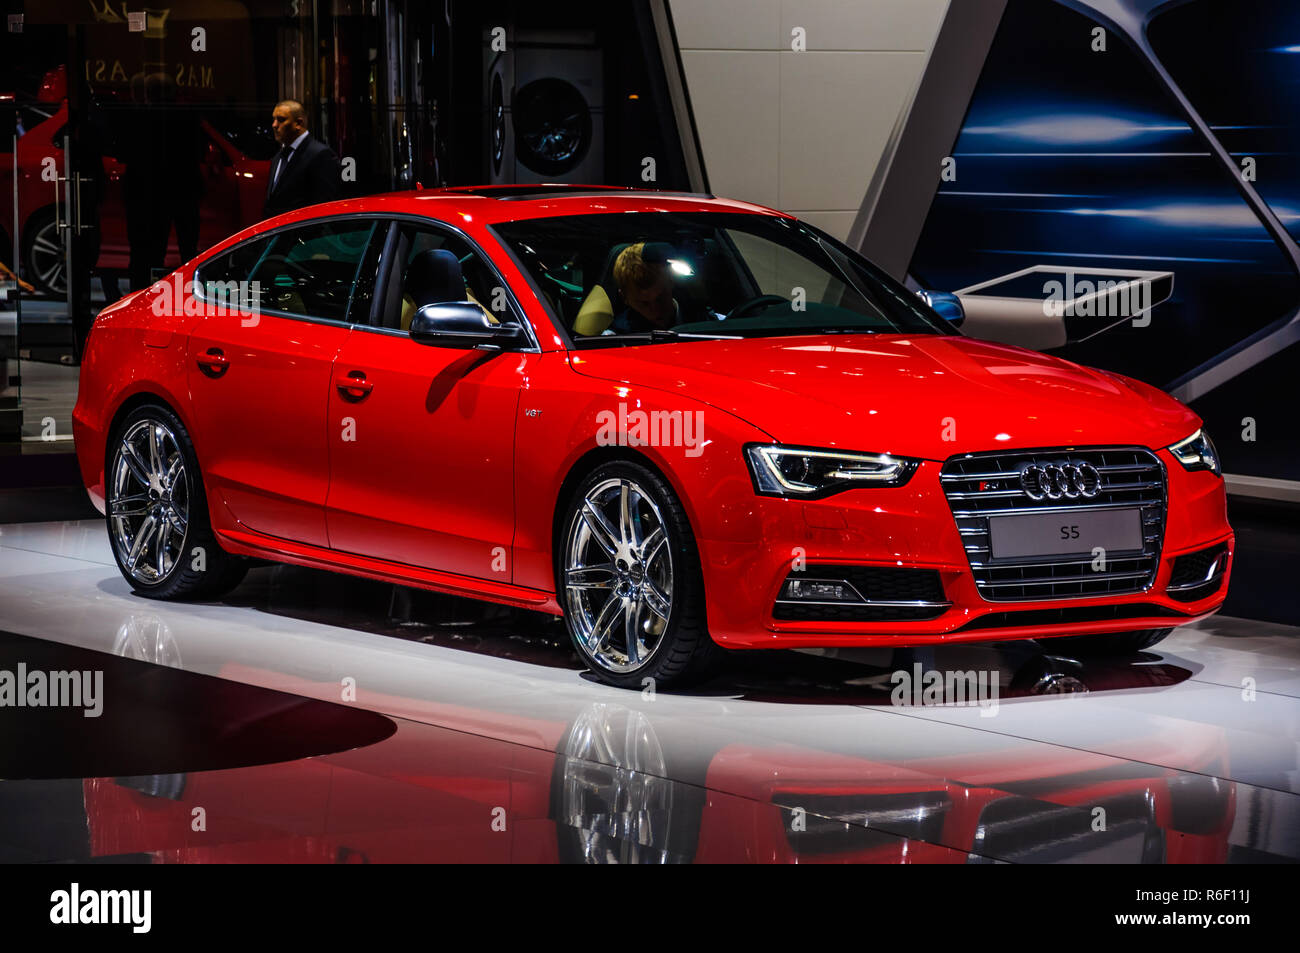 Audi s5 sportback -Fotos und -Bildmaterial in hoher Auflösung – Alamy